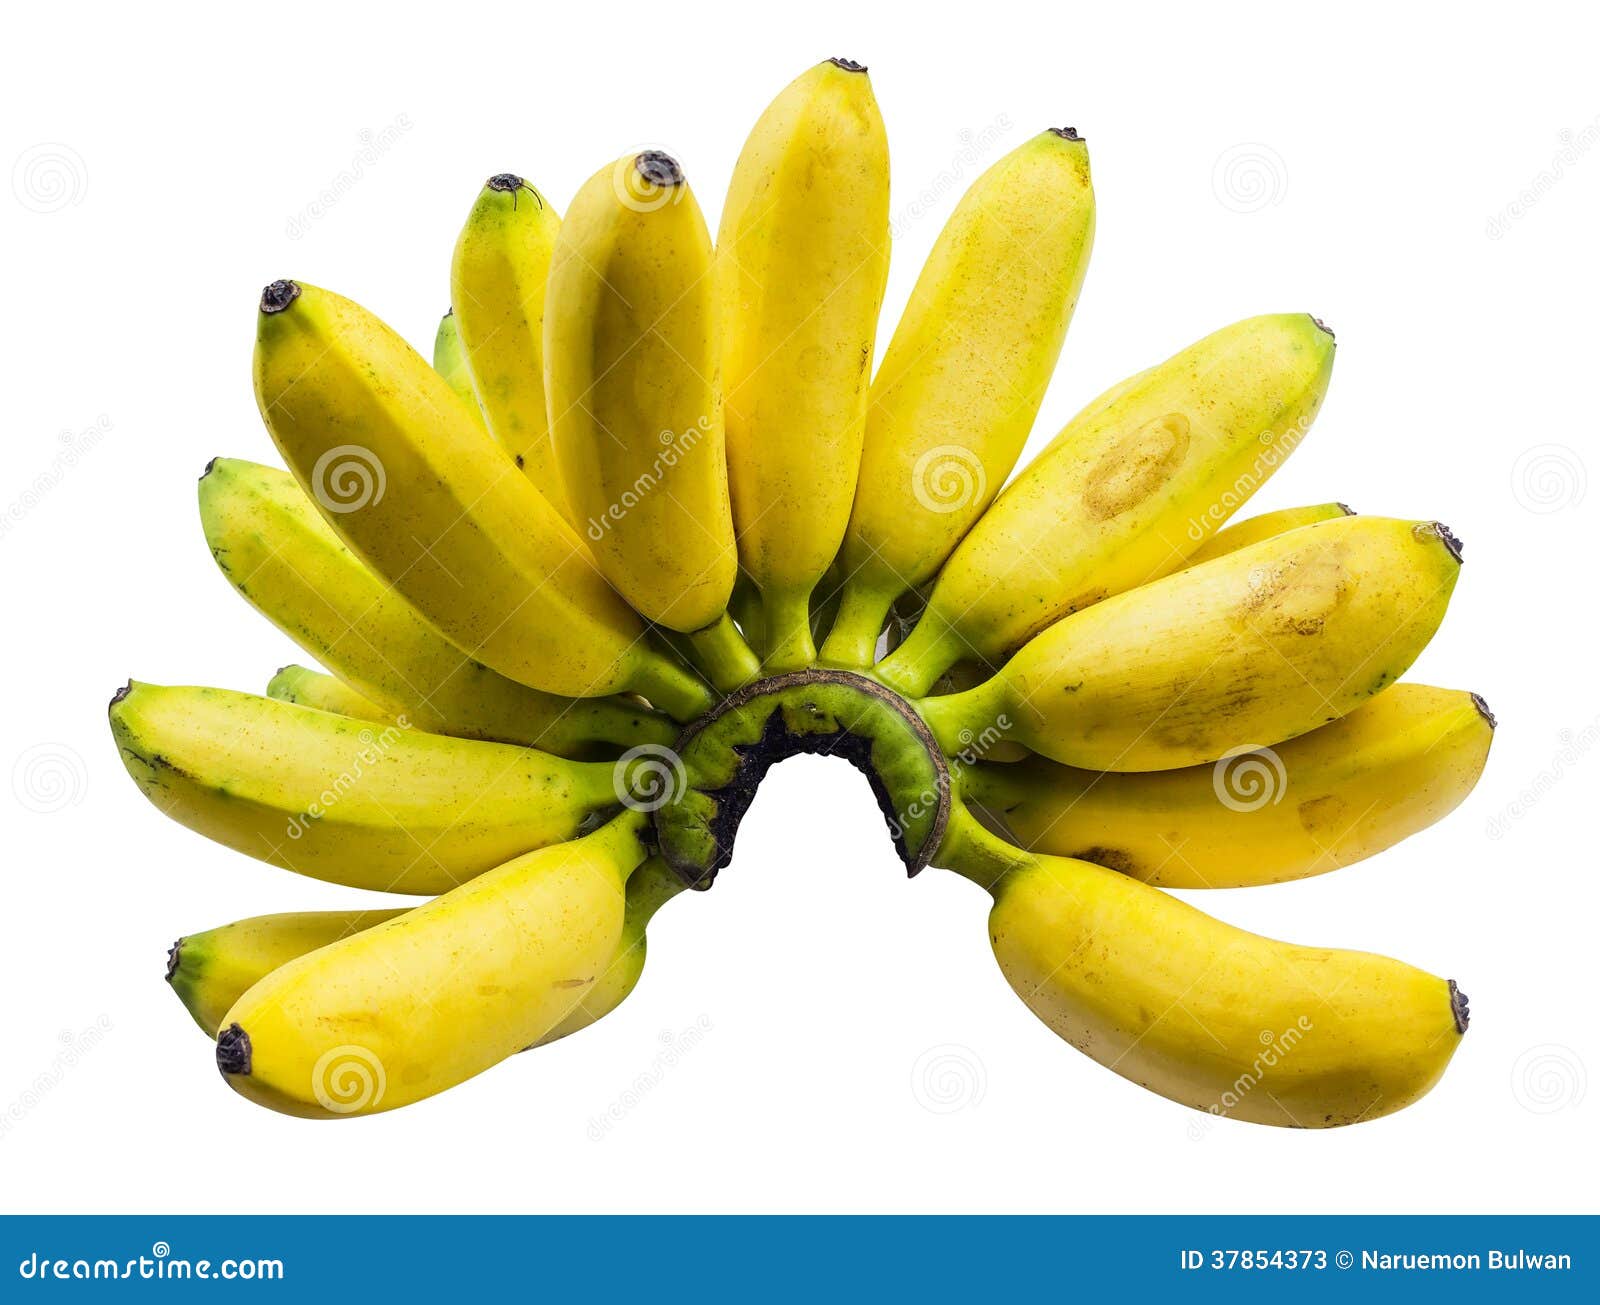  Pisang Mas  banana stock image Image of health healthy 